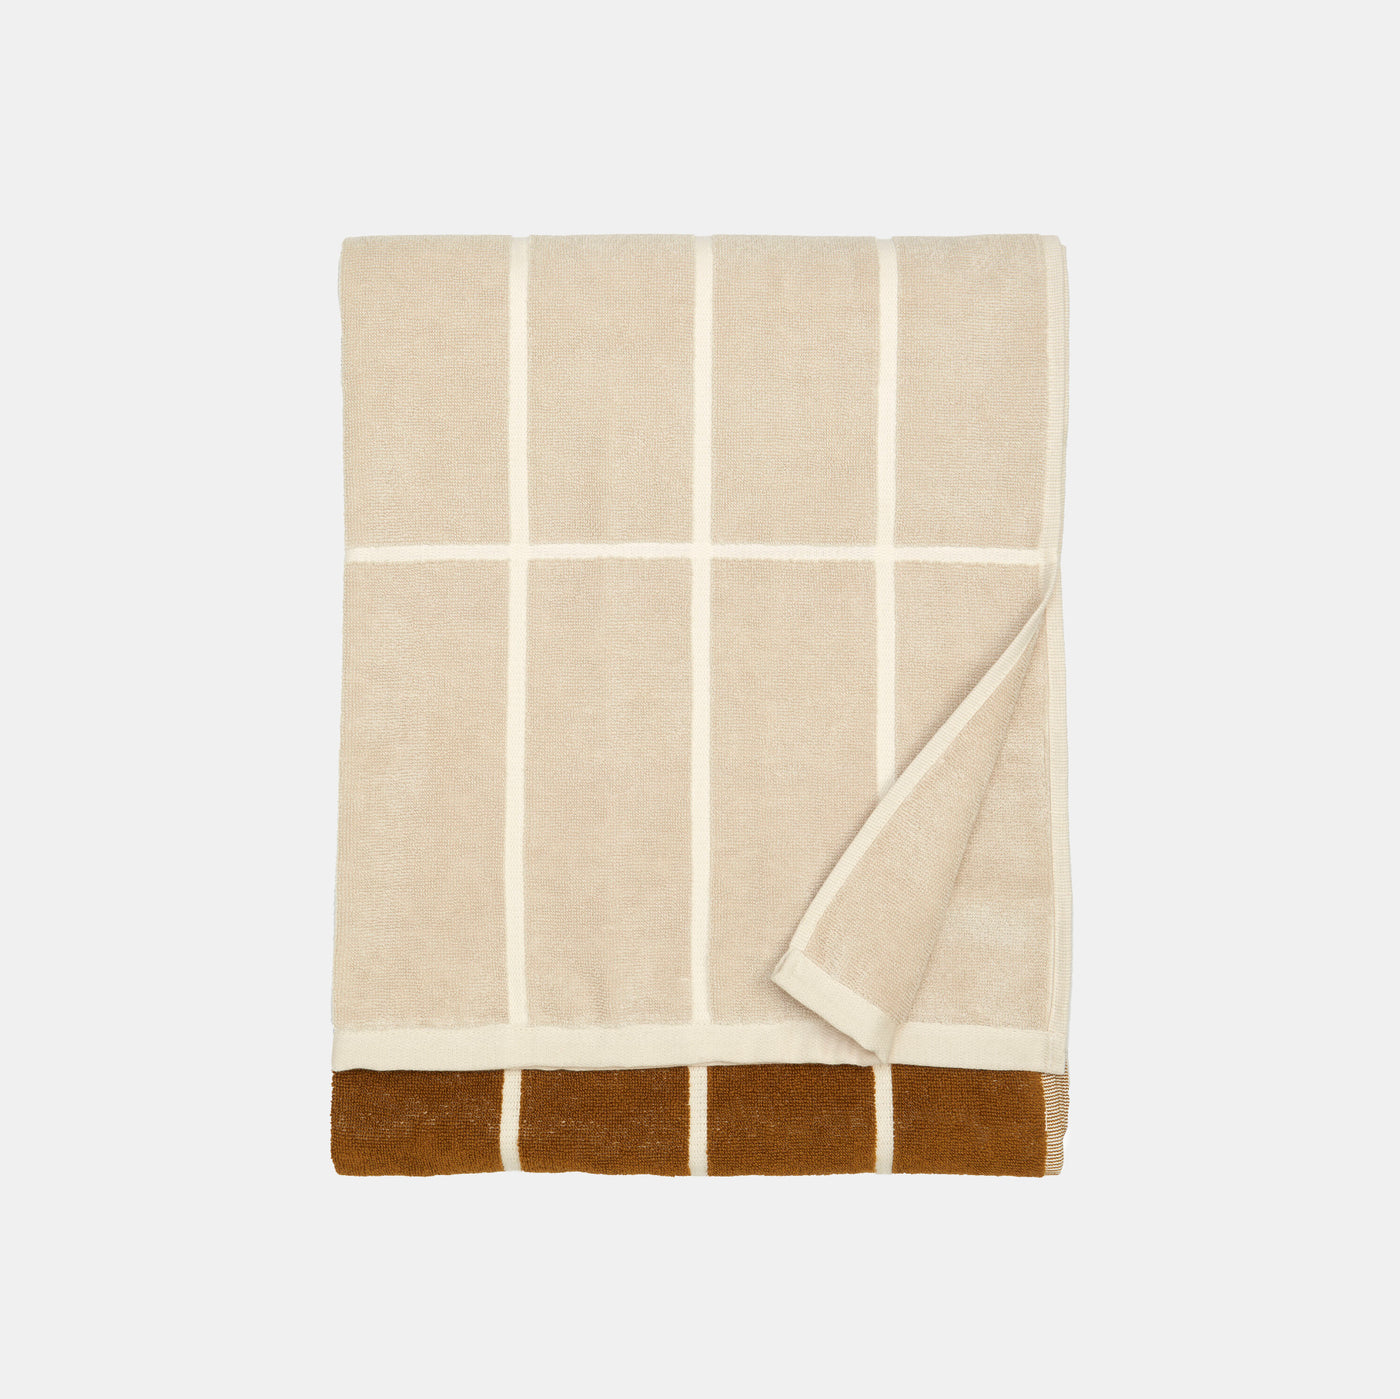 Tiiliskivi bath towel 70x150 cm